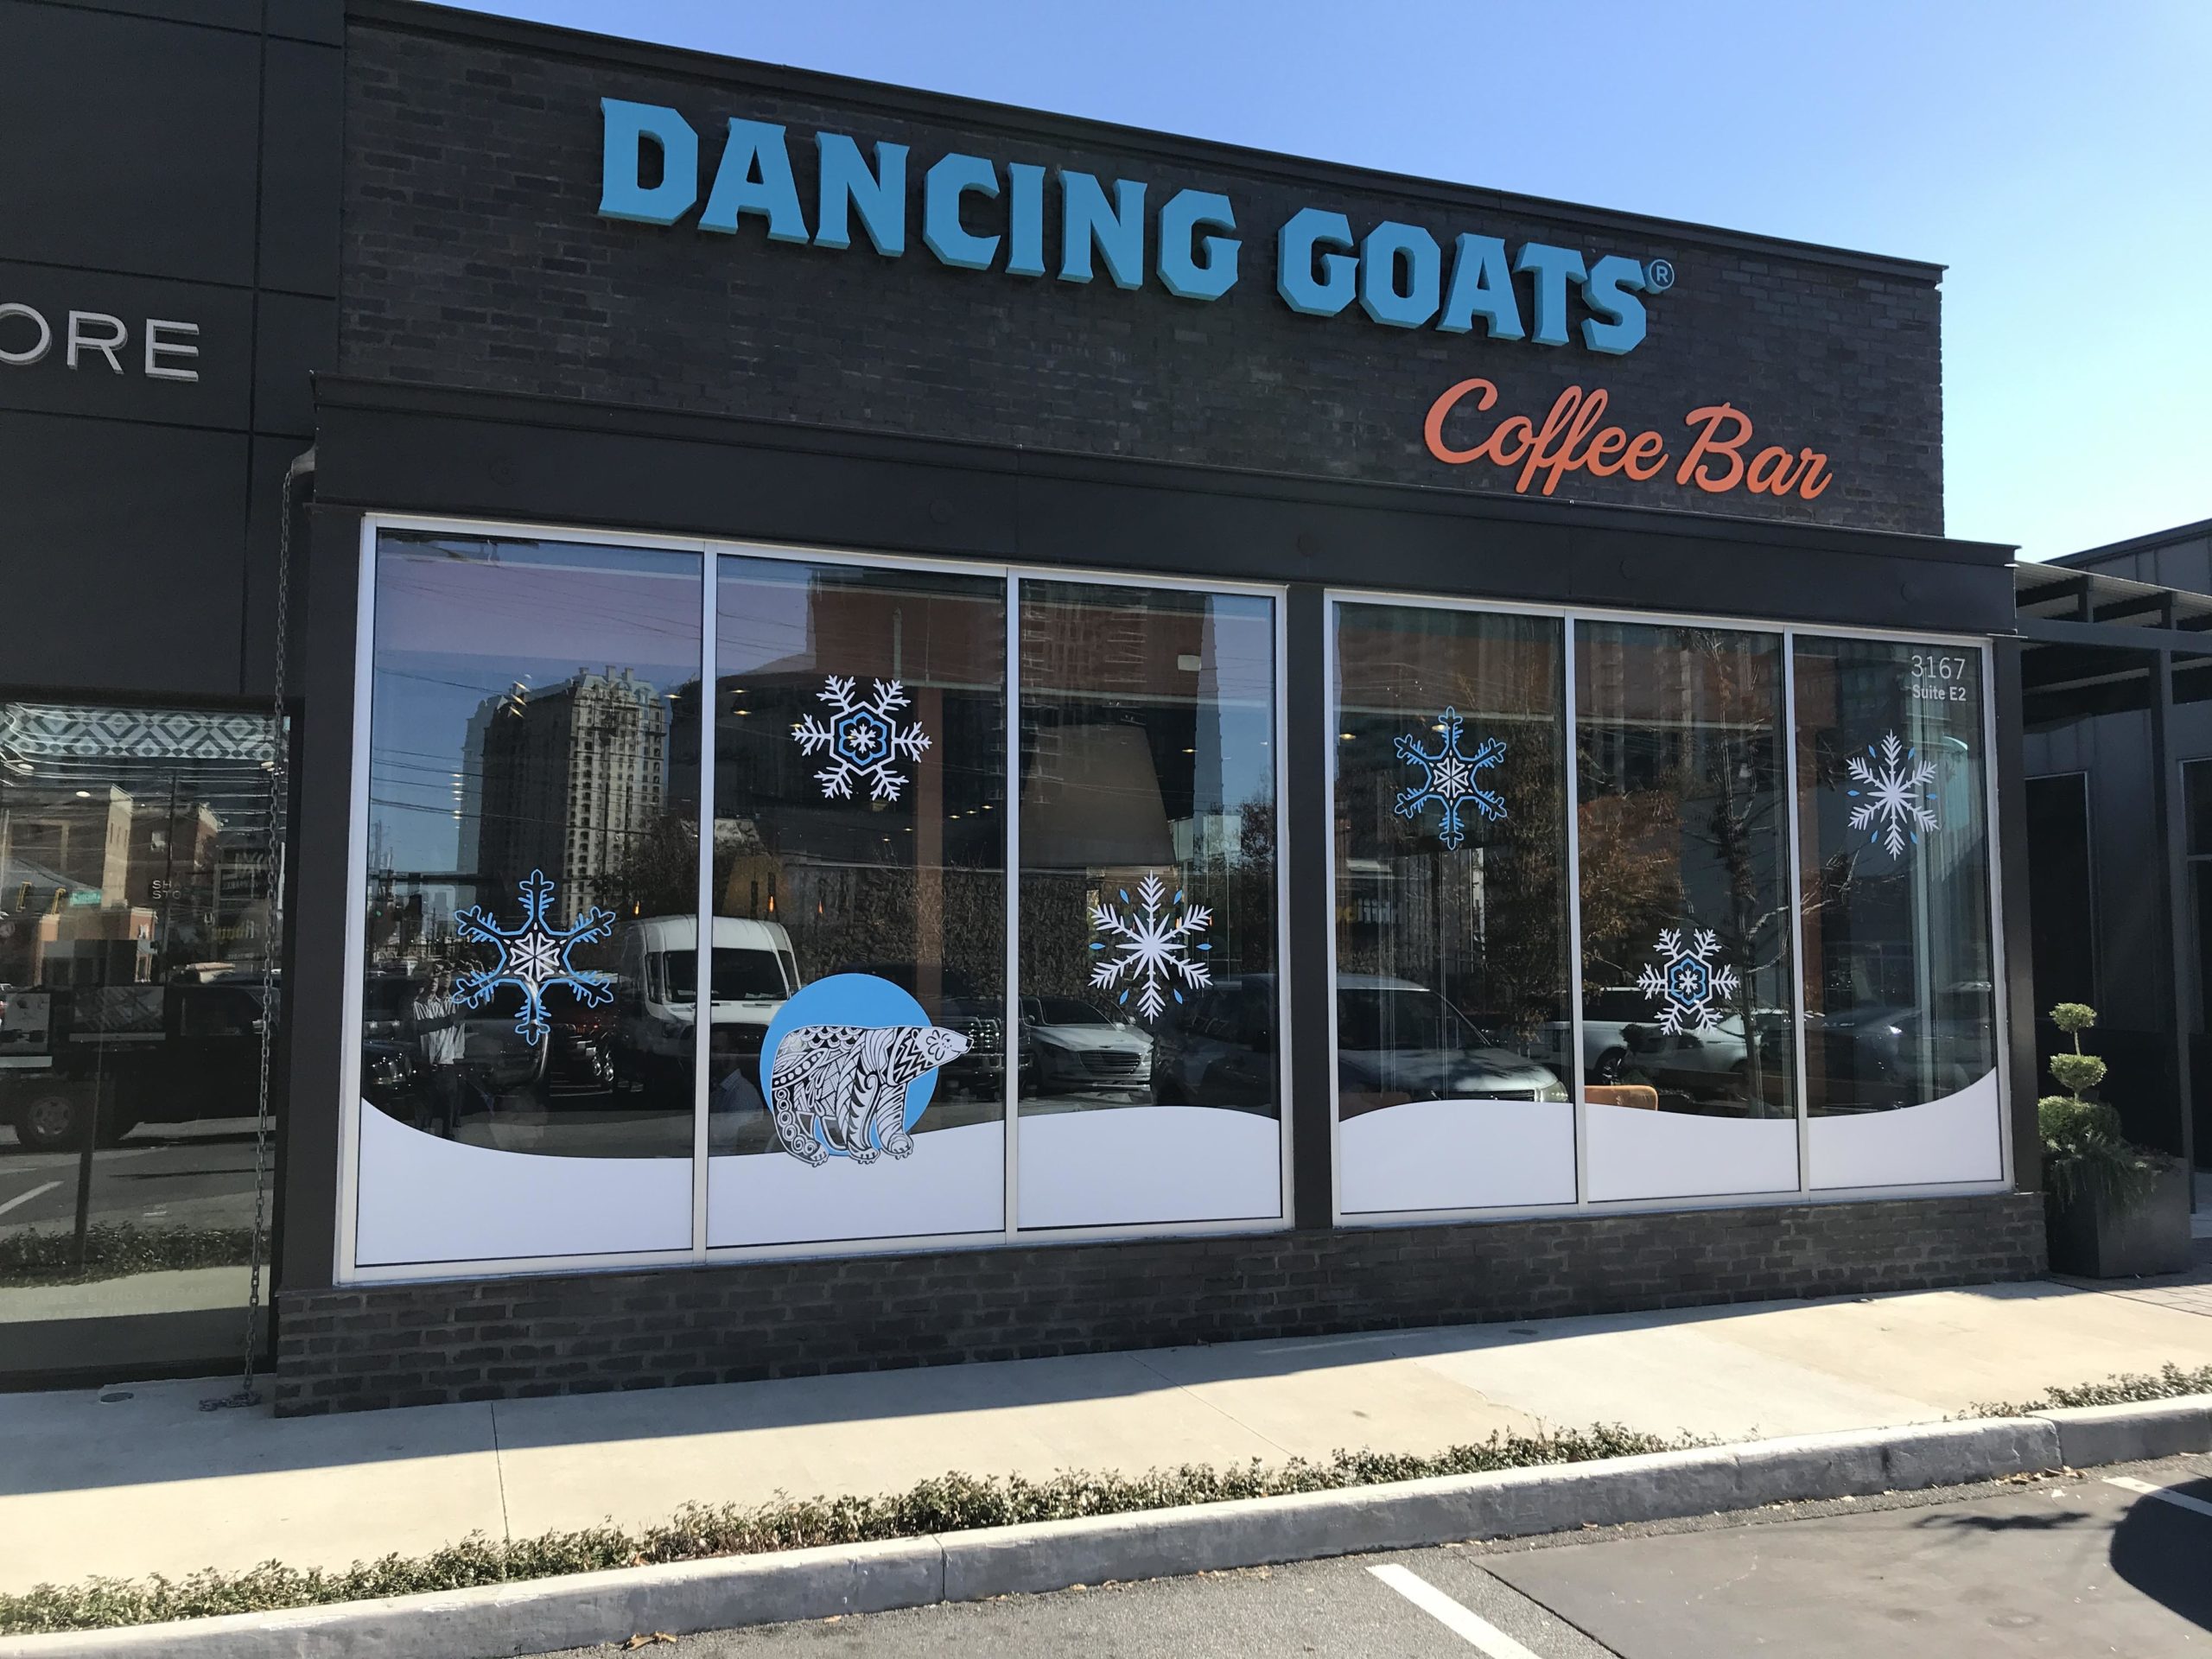 Dancing Goats Coffee Bar signage